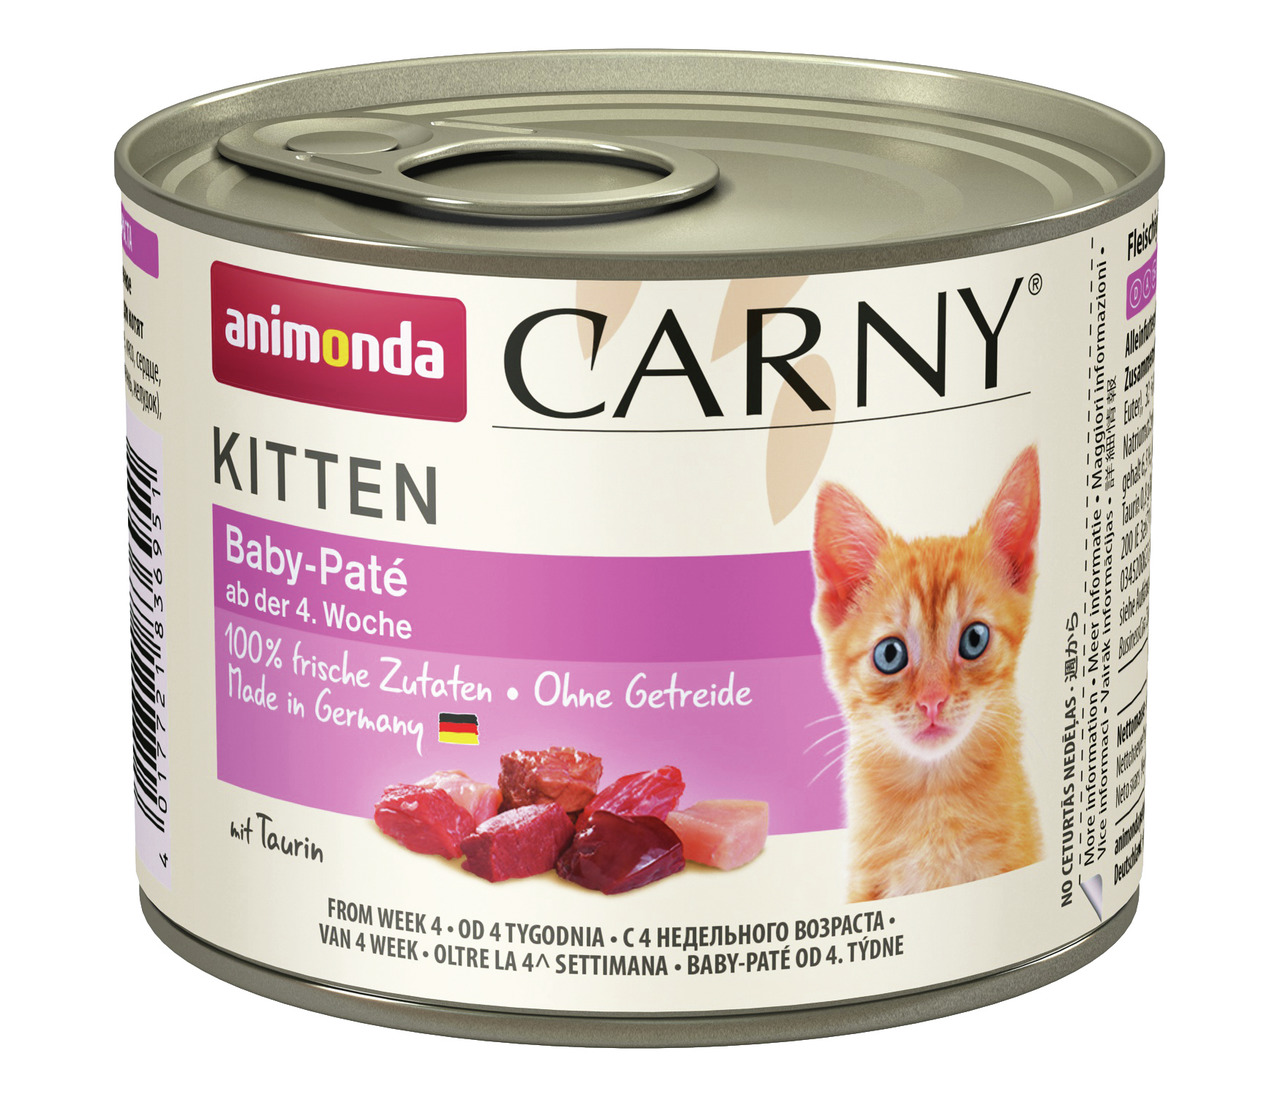 Sparpaket 24 x 200 g Animonda Carny Kitten Baby-Paté Katzen Nassfutter